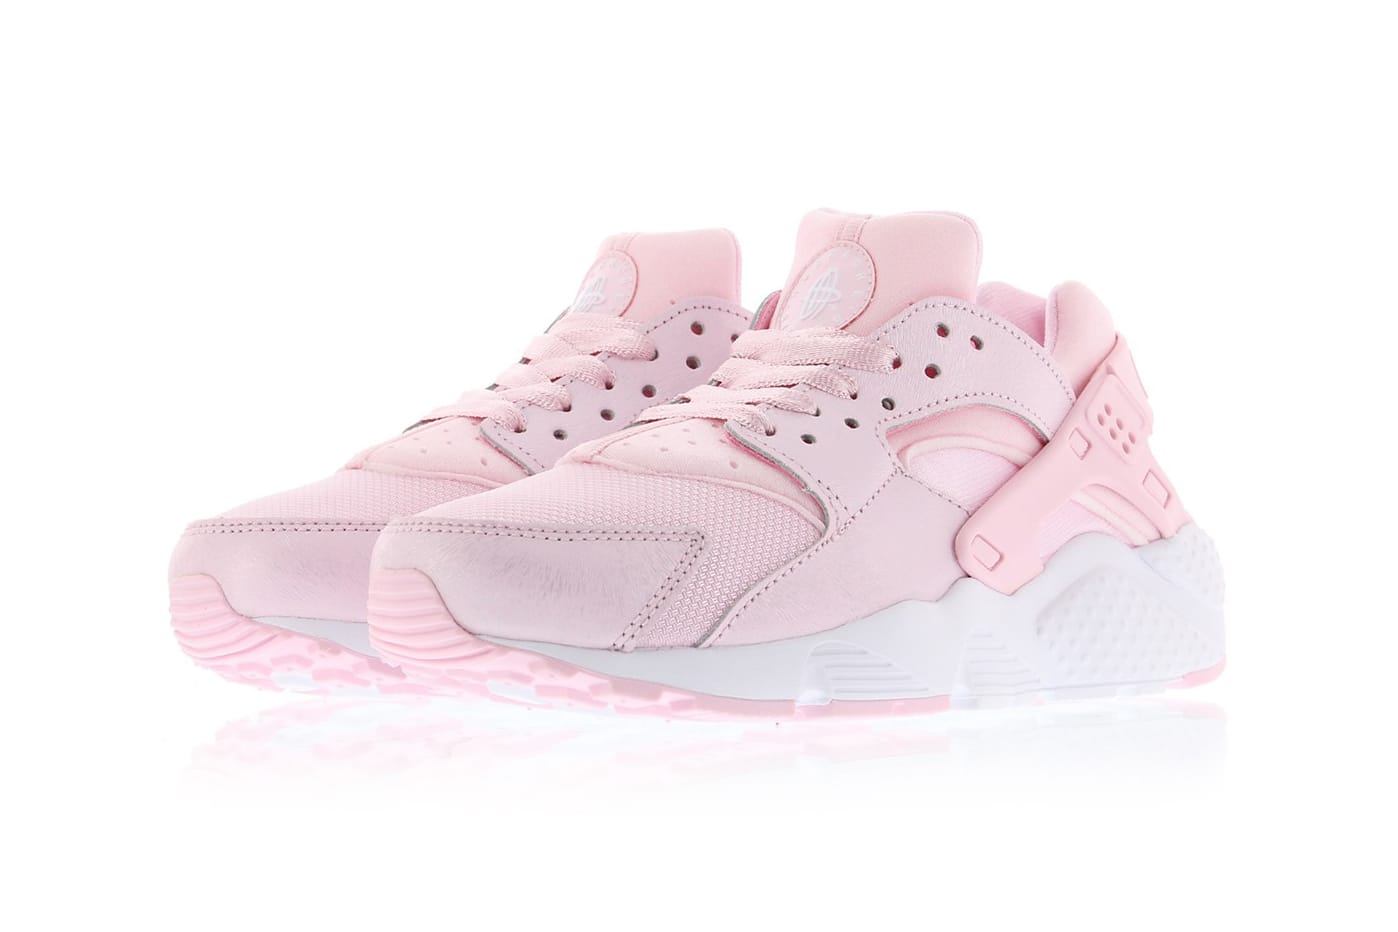 Nike Air Huarache Run Goes Prism Pink 